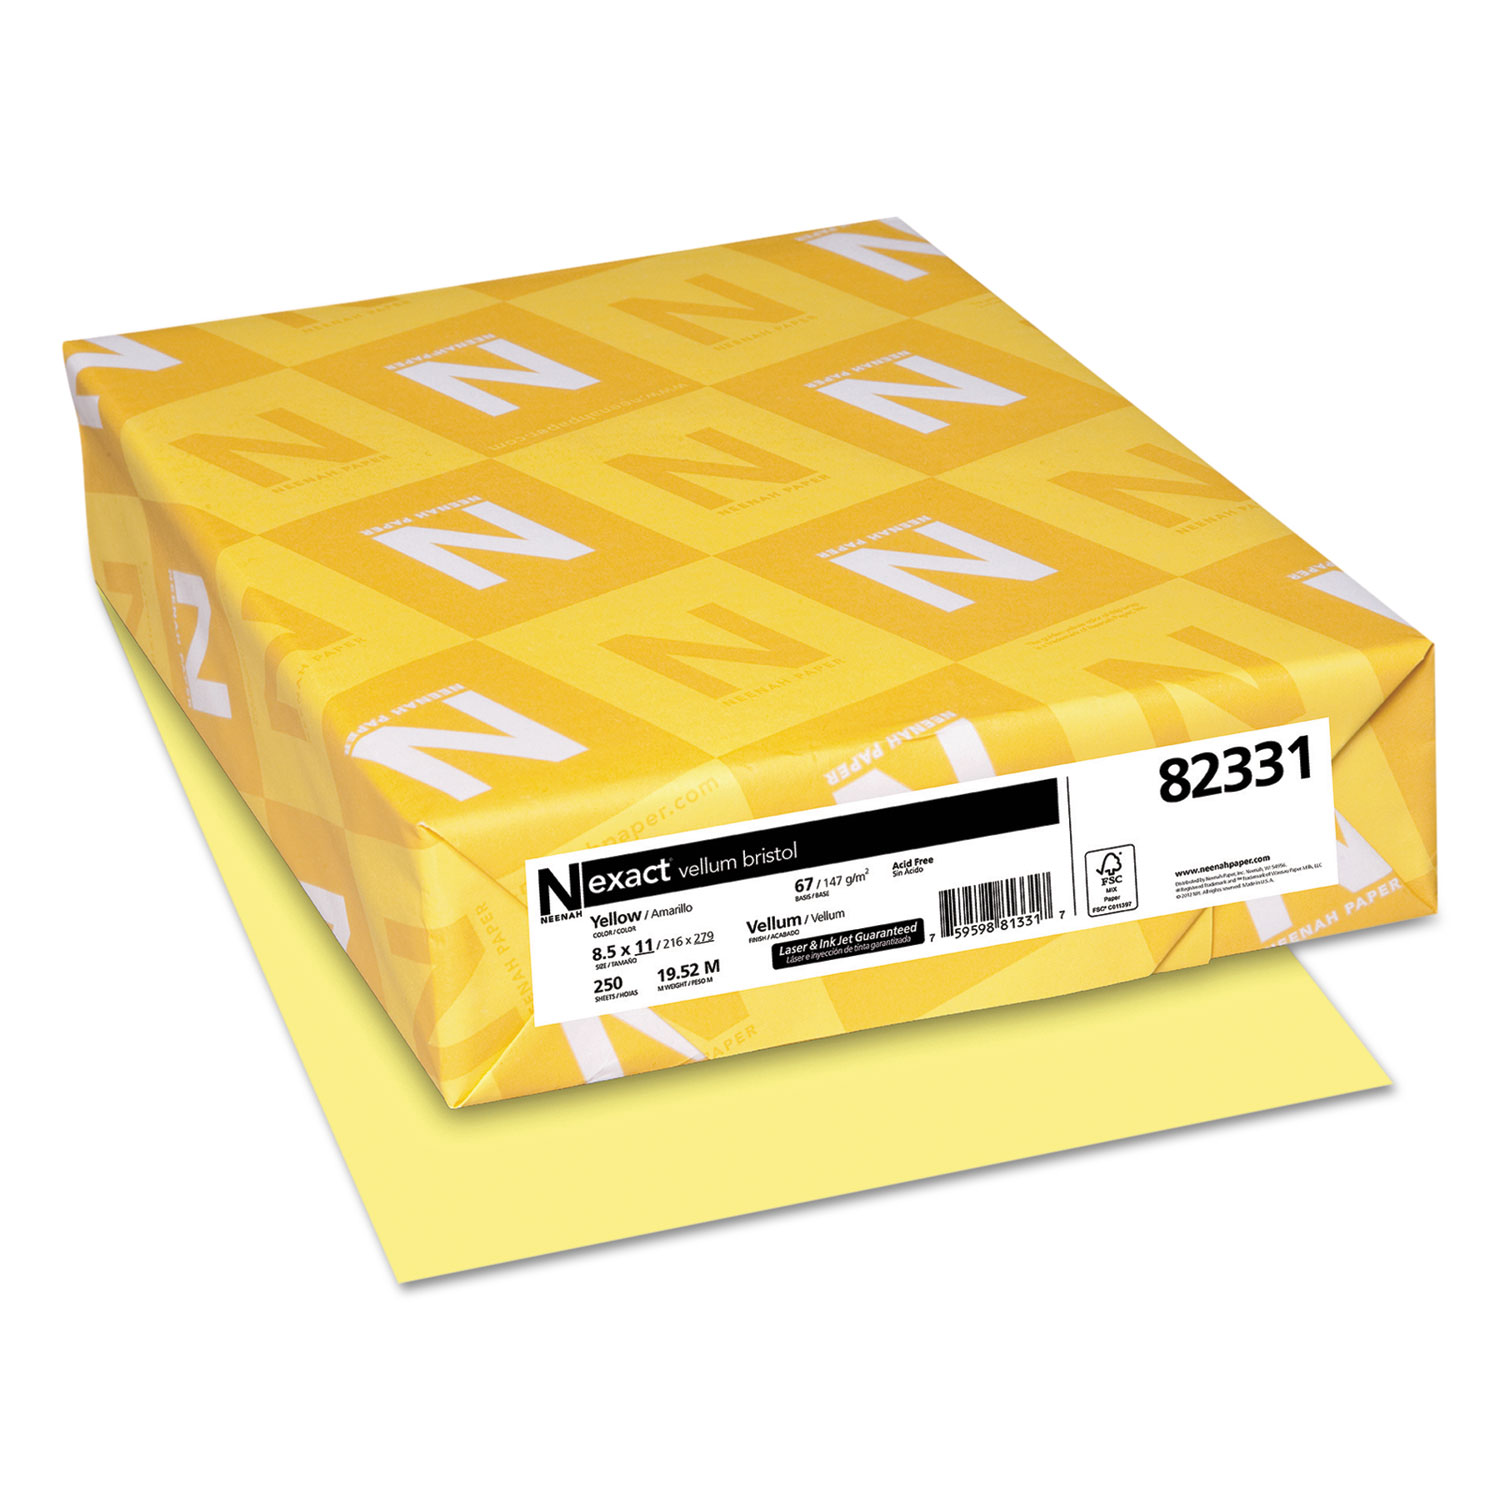  Neenah Paper 82331 Exact Vellum Bristol Cover Stock, 67lb, 8.5 x 11, 250/Pack (WAU82331) 